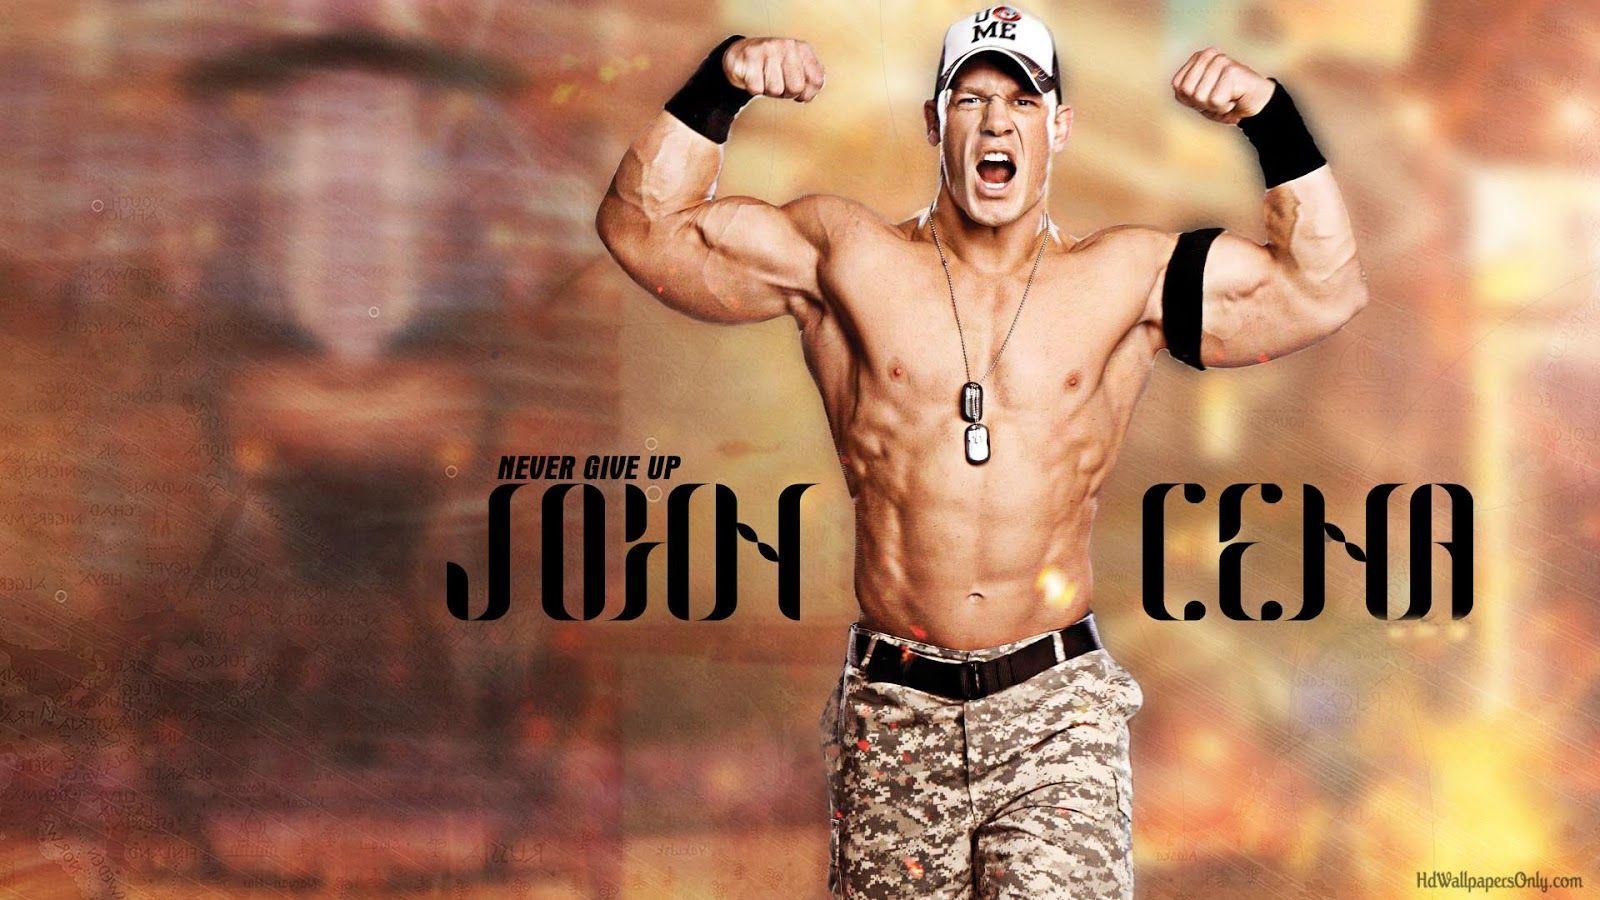 John Cena HD Wallpaper Free Image Download HD WALLPAPER